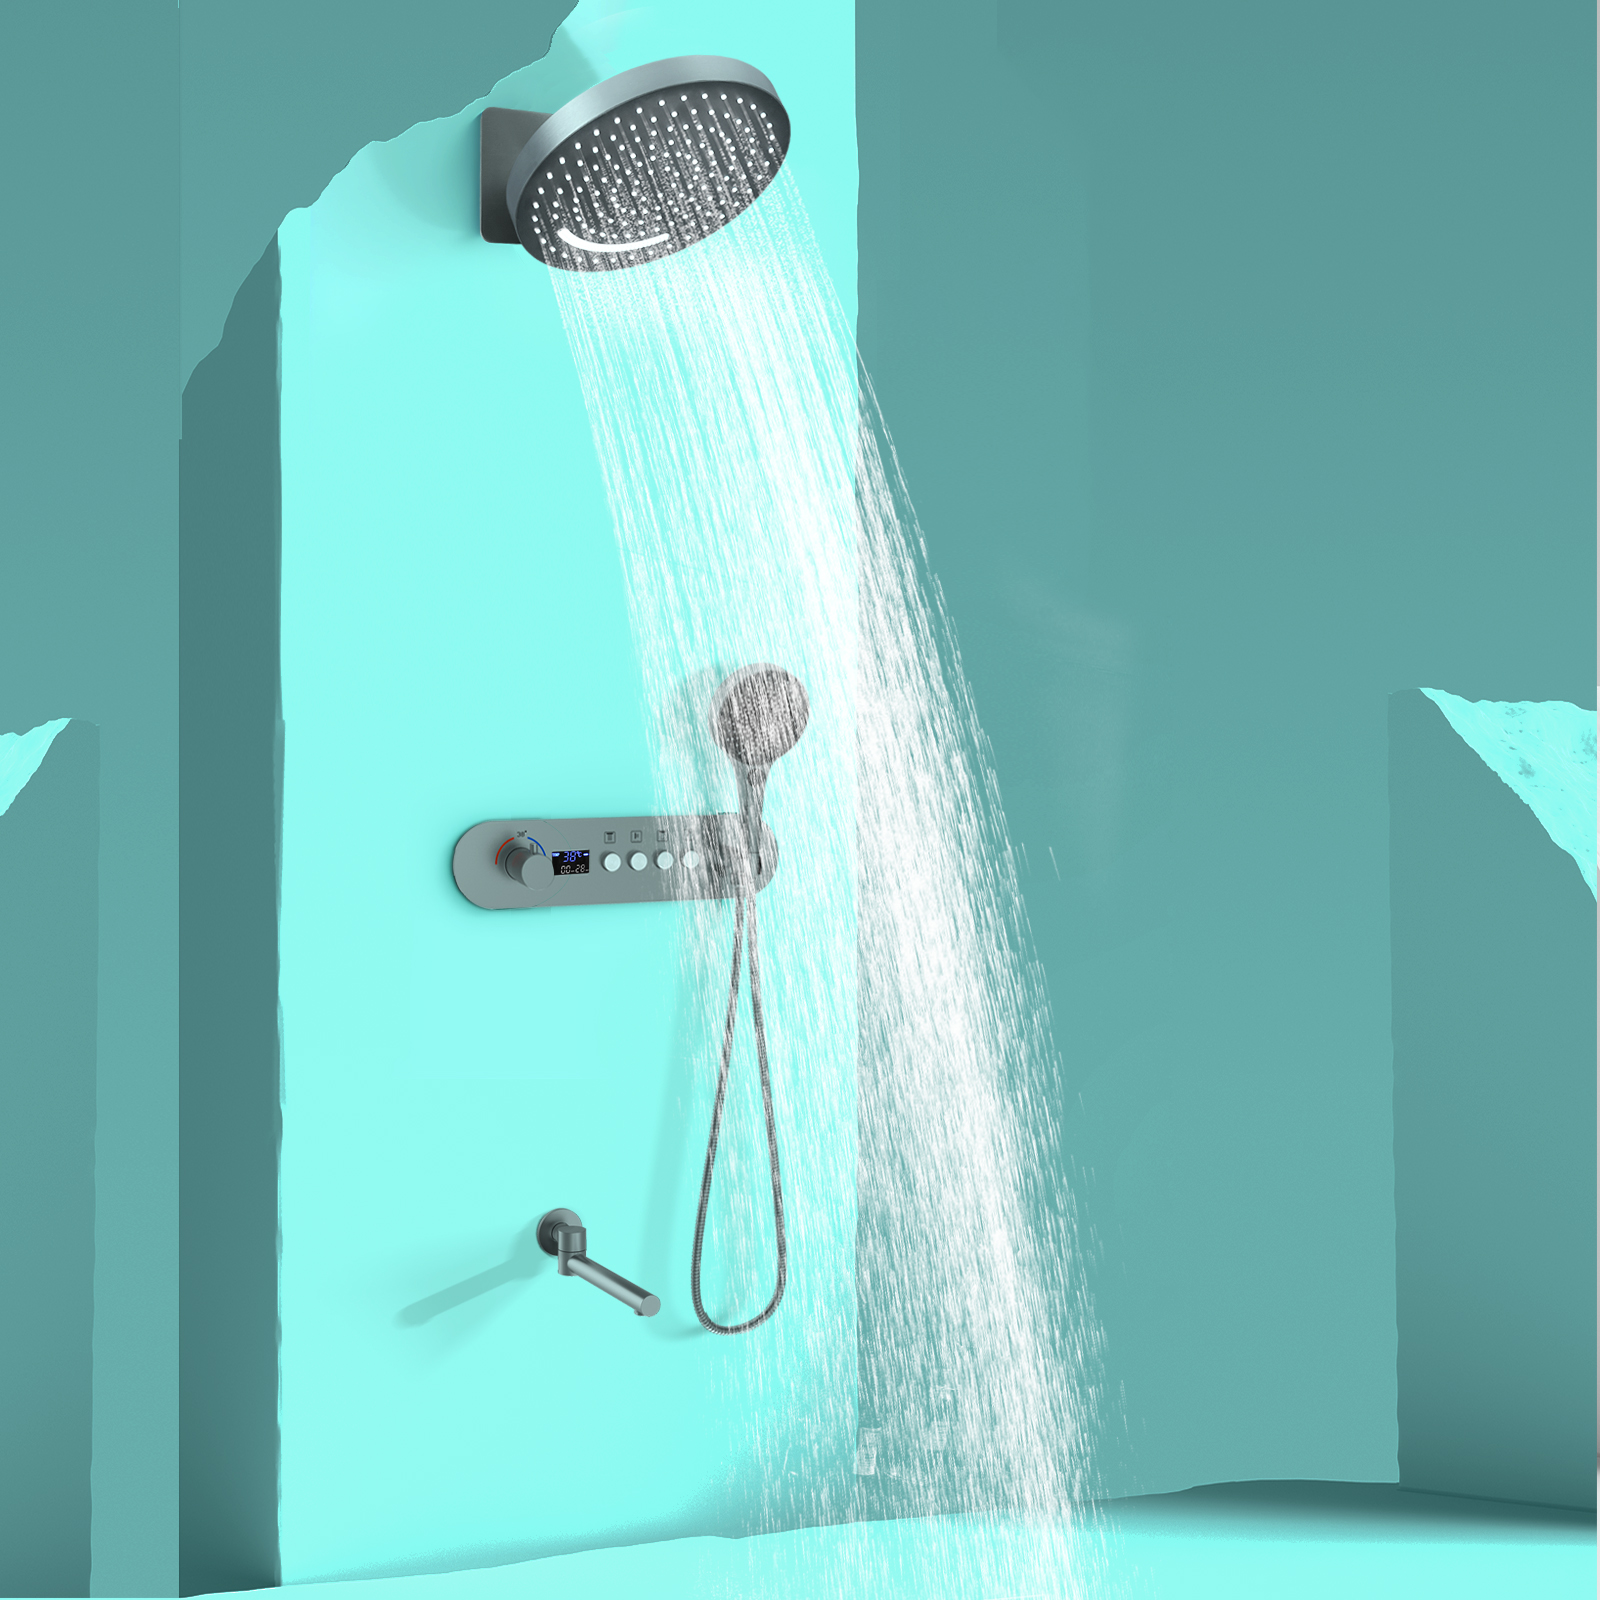 Painel de chuveiro de parede para banheiro, sistema de chuveiro de bronze, número mostrado, kit de chuveiro de 4 funções